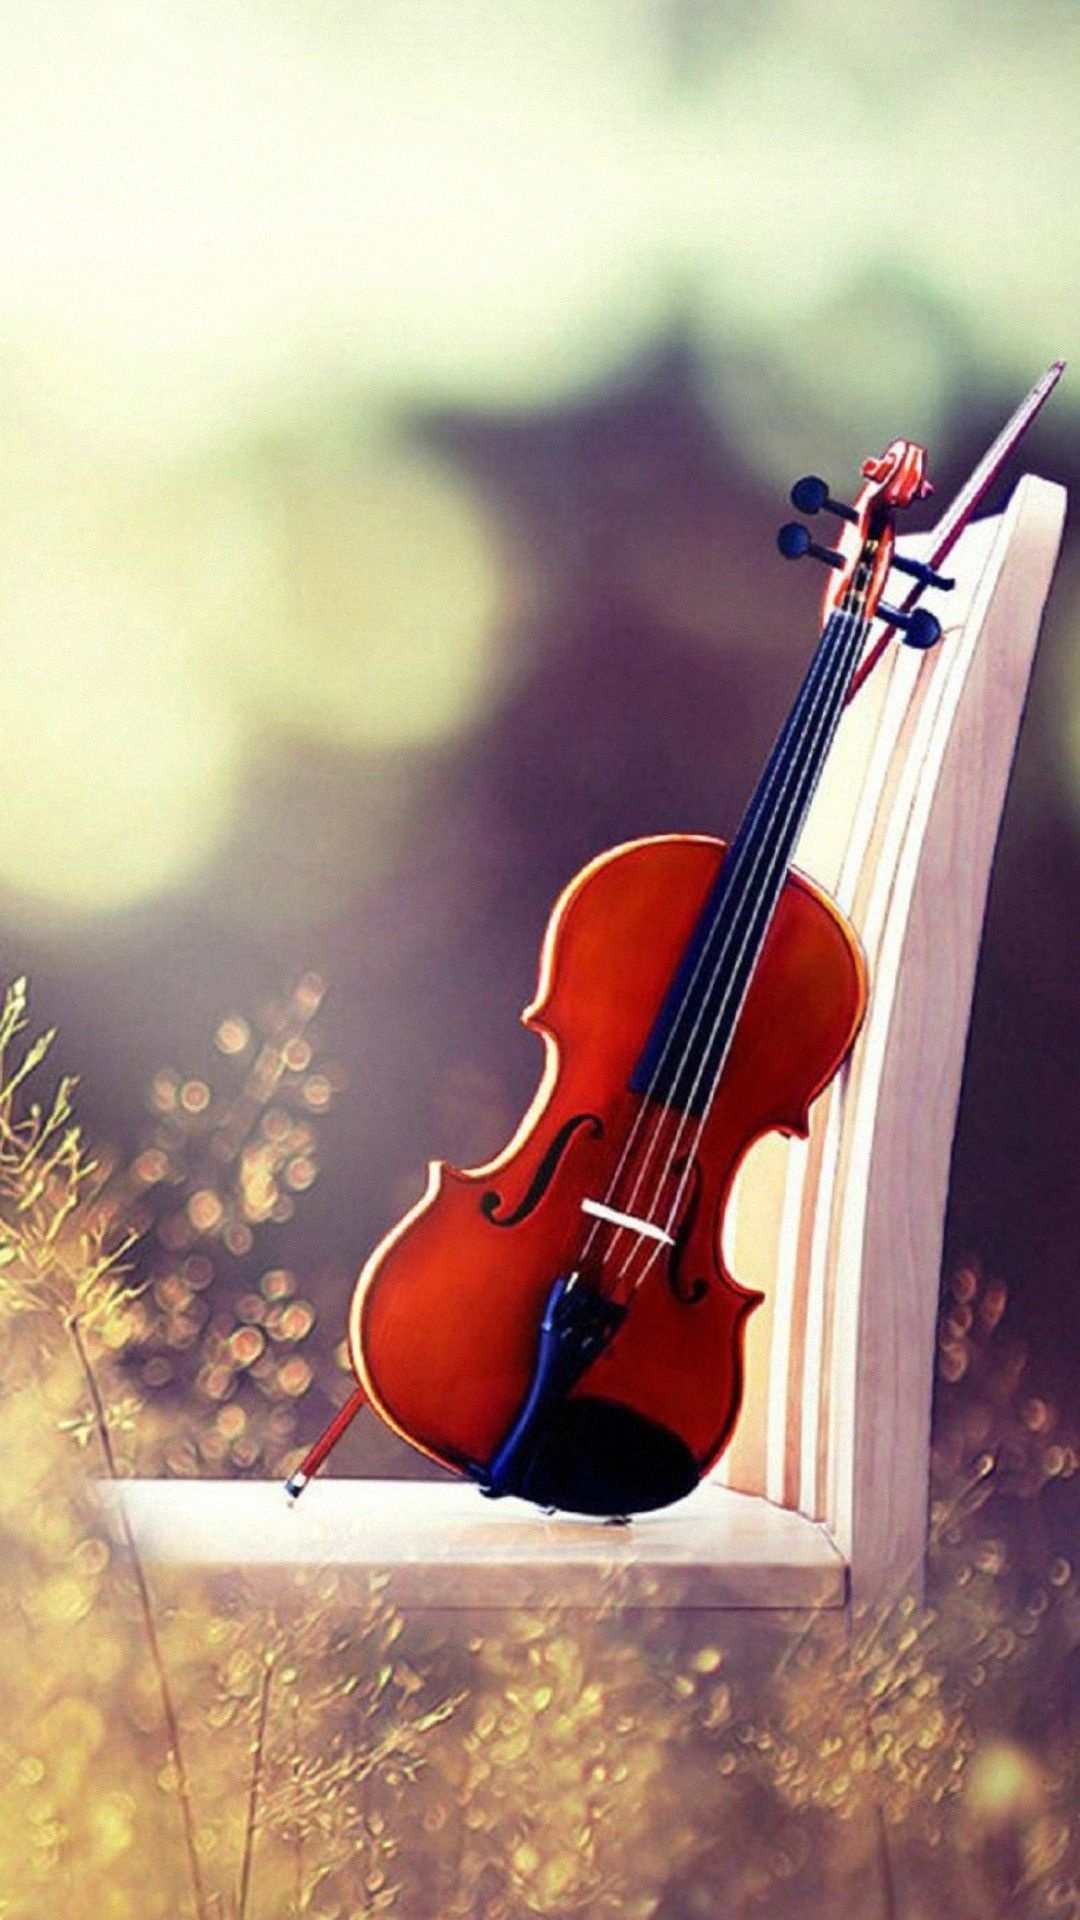 Violin: Prepared For Outdoor Performance, Folk Music Festival In The Open Field. 1080x1920 Full HD Wallpaper.